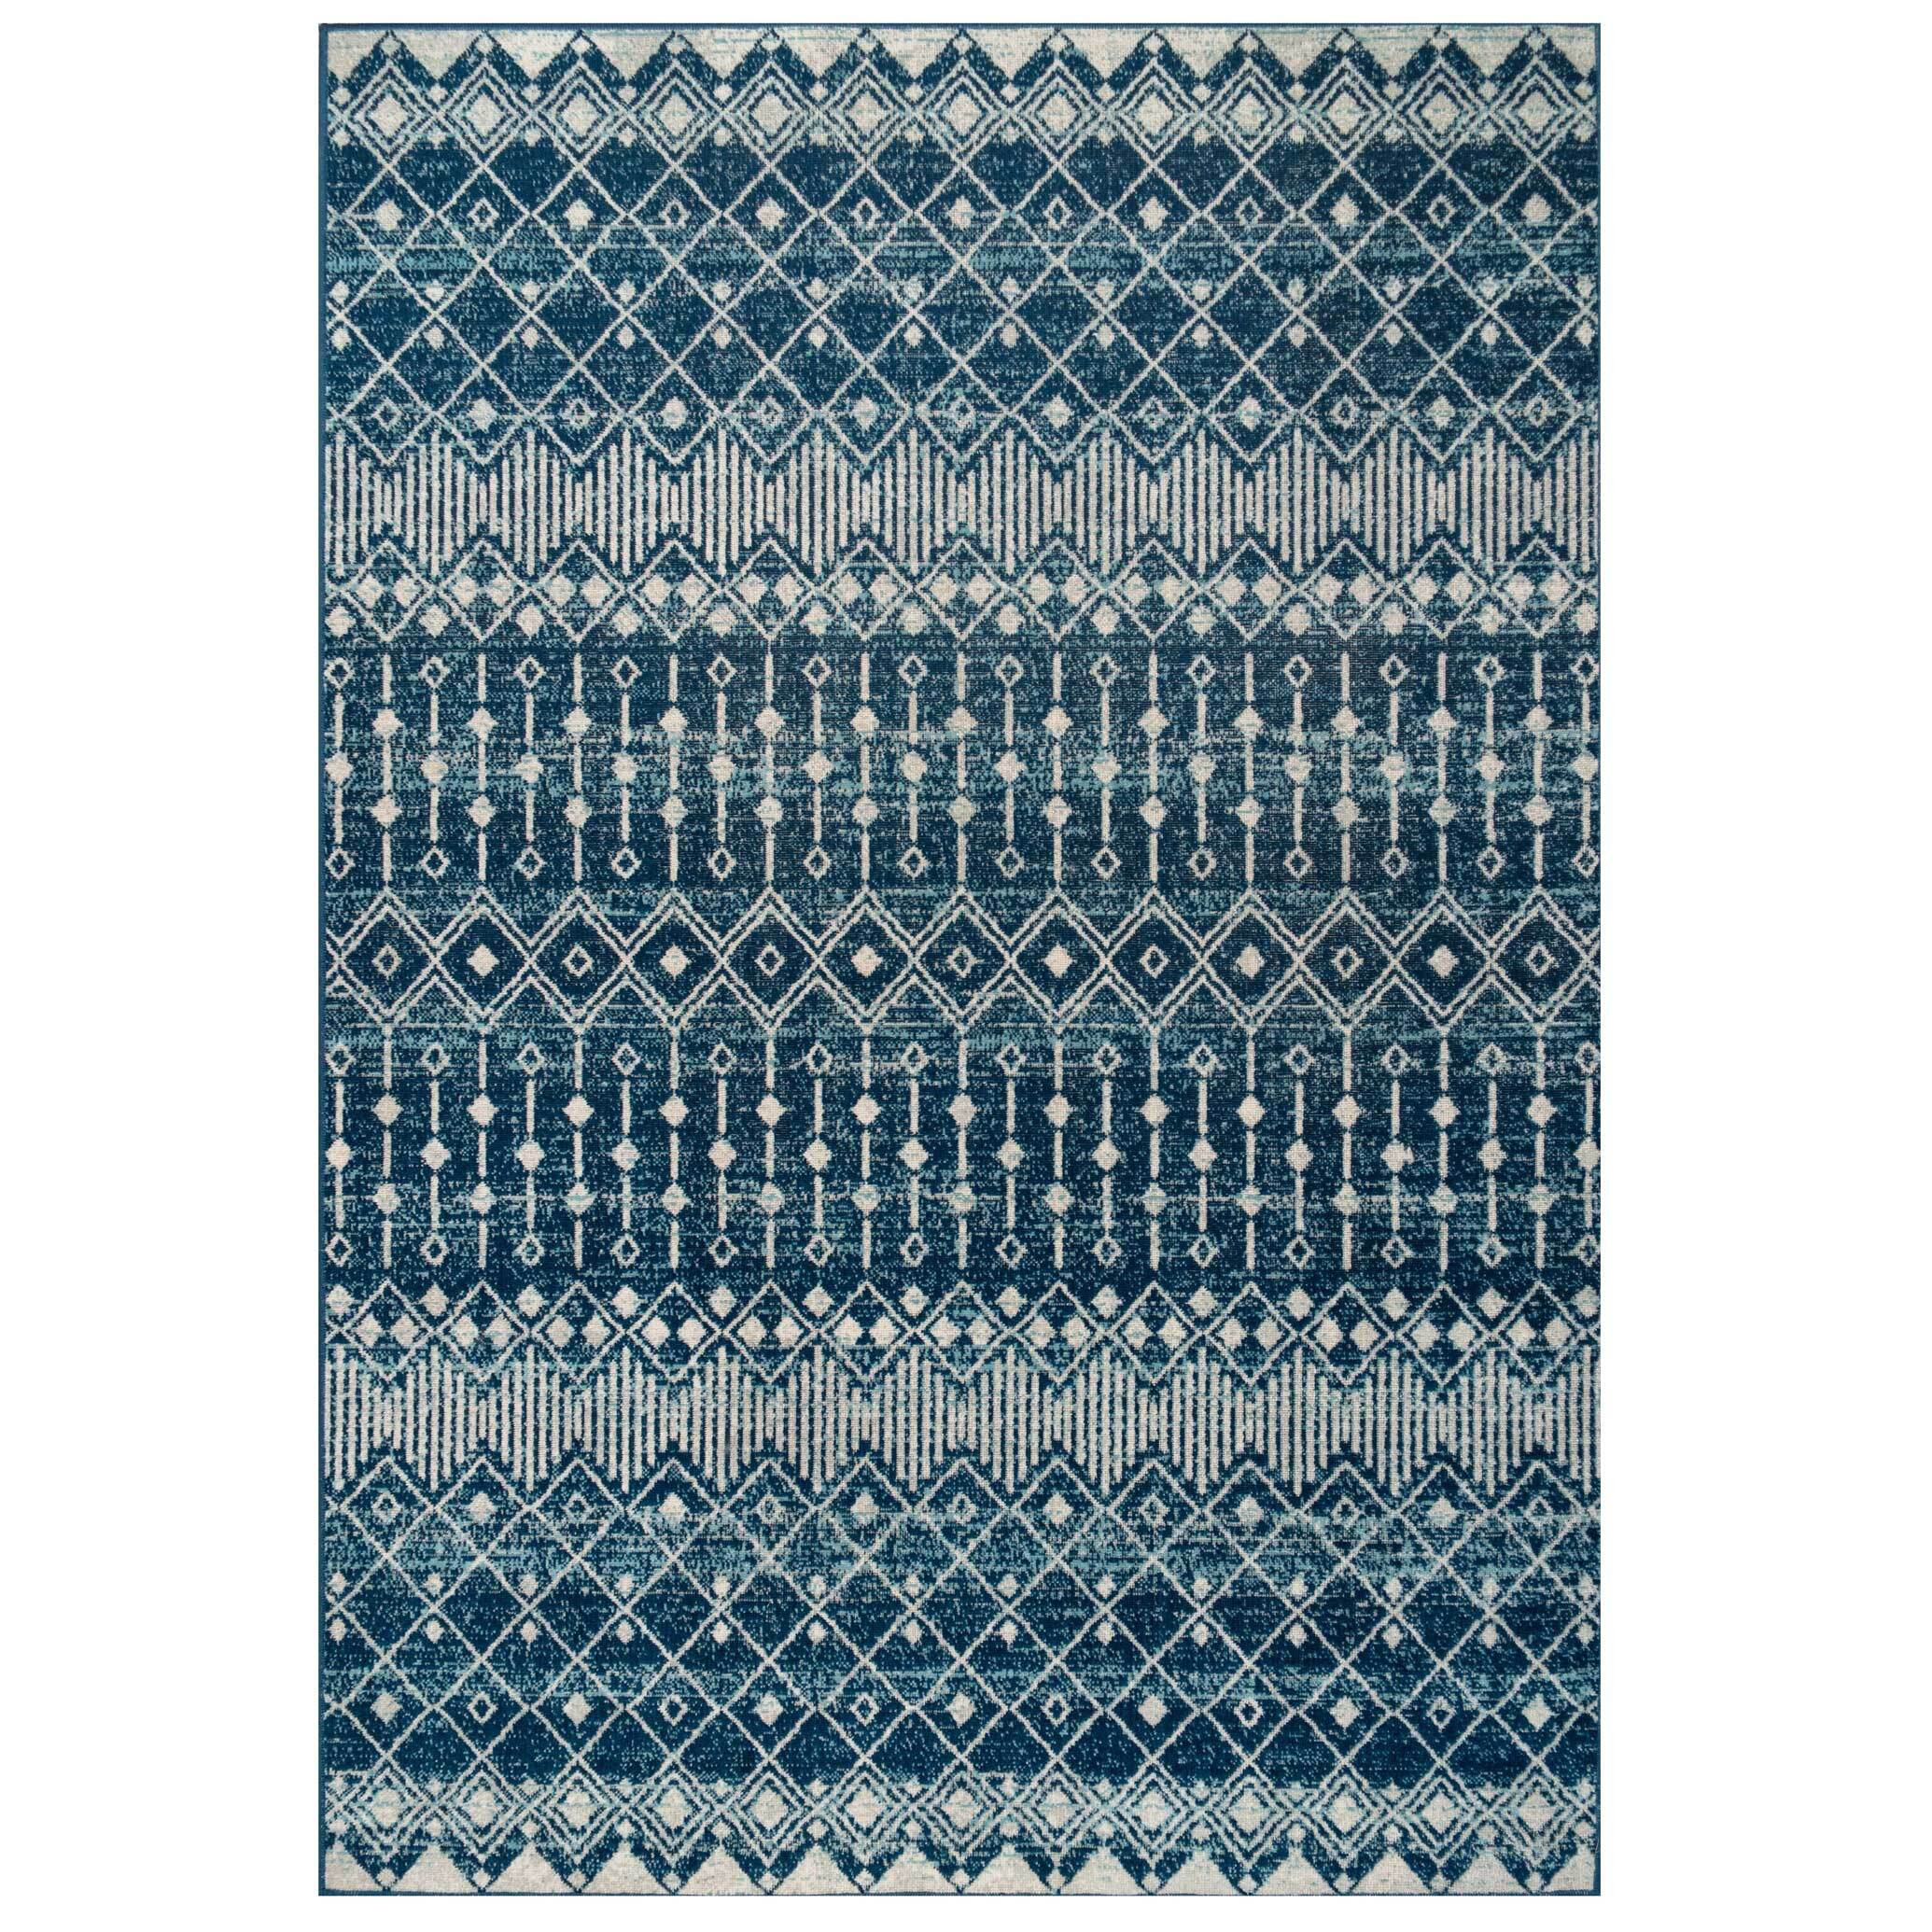 Blue Moroccan Tile Living Room Rug - Moda - 60cm x 110cm